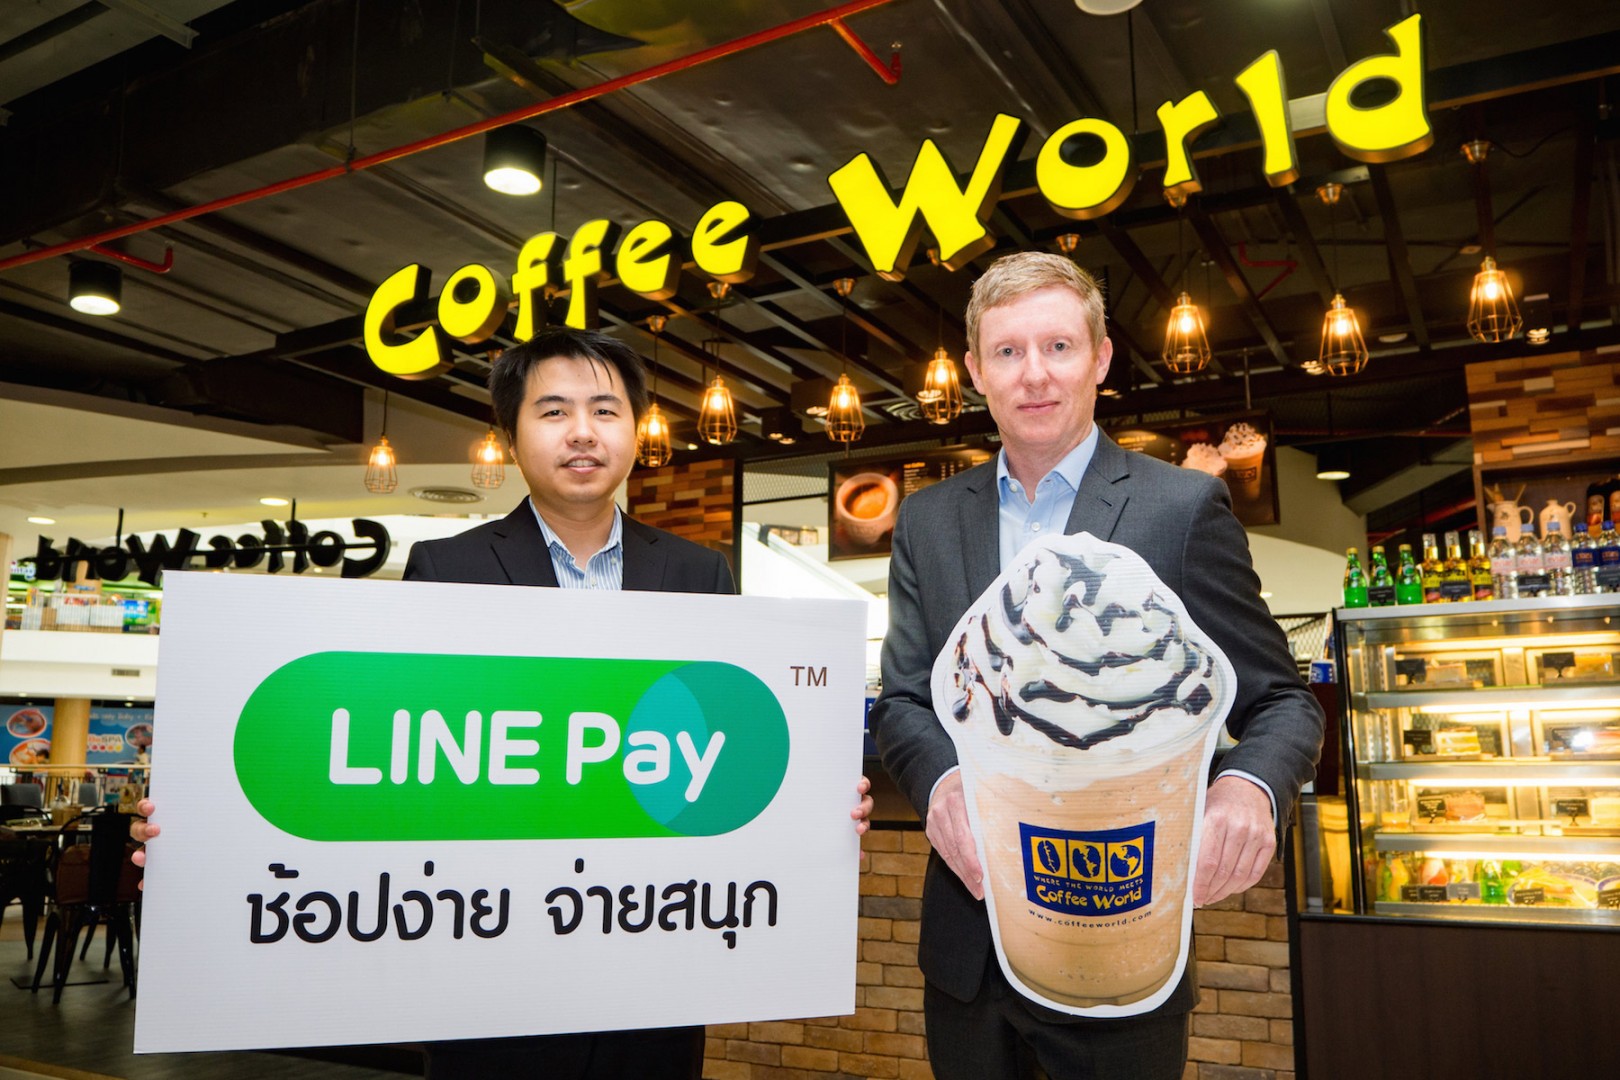 LINE Pay ประเดิม “Coffee World” เปิดตัว webPOS พร้อมโปรฯ เด็ด ๆ เพียบ!